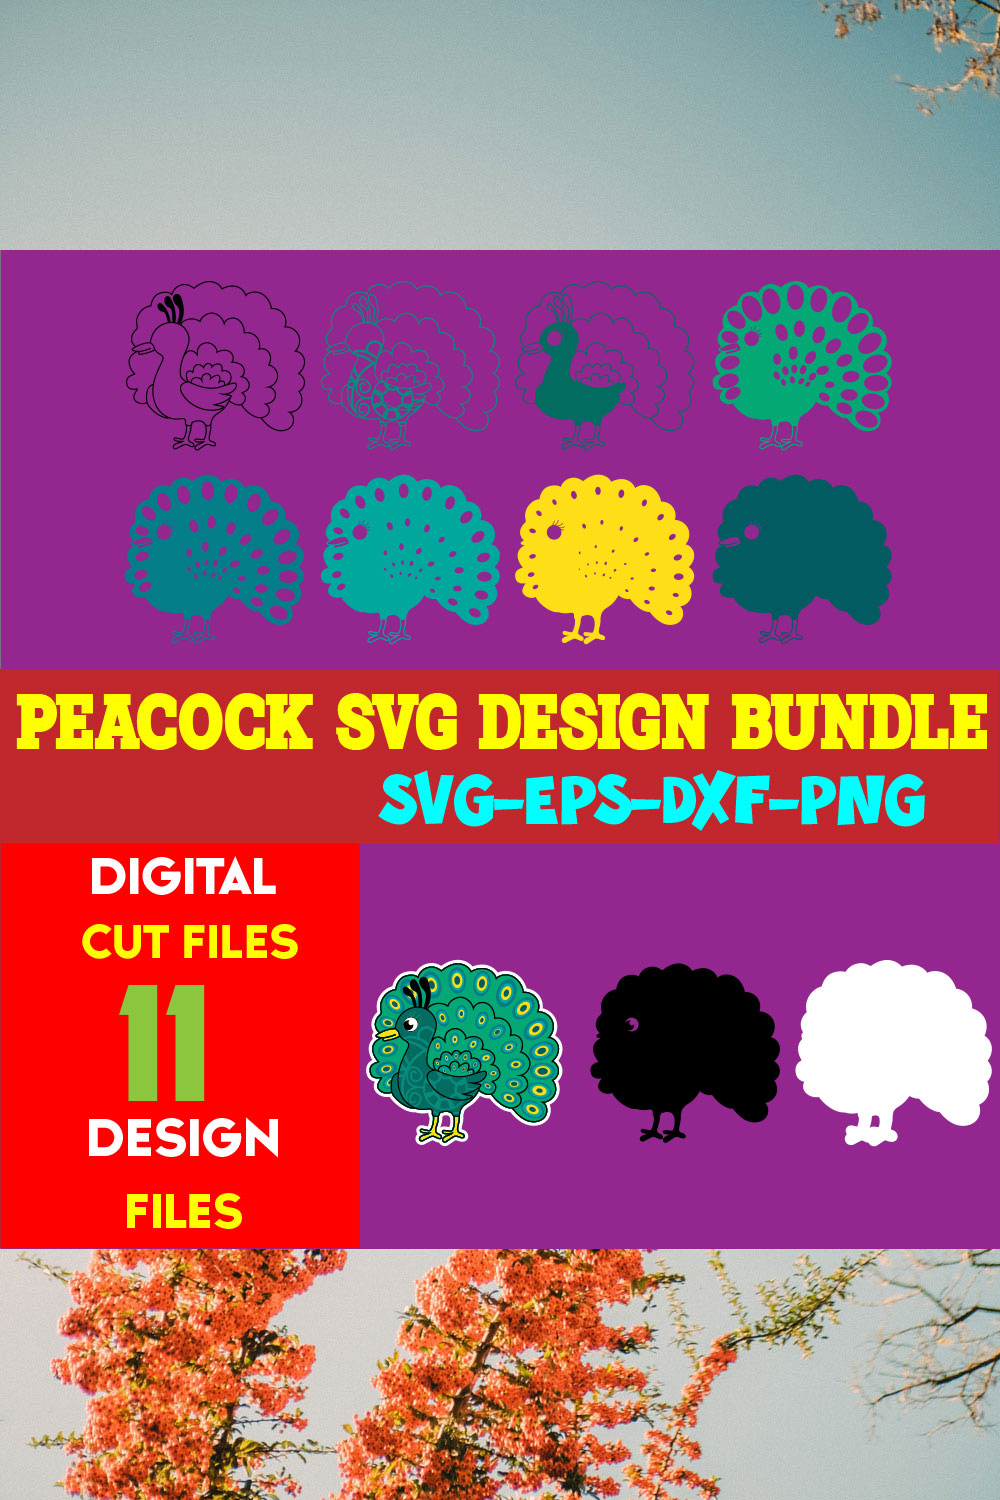 Peacock SVG Design Bundle pinterest preview image.